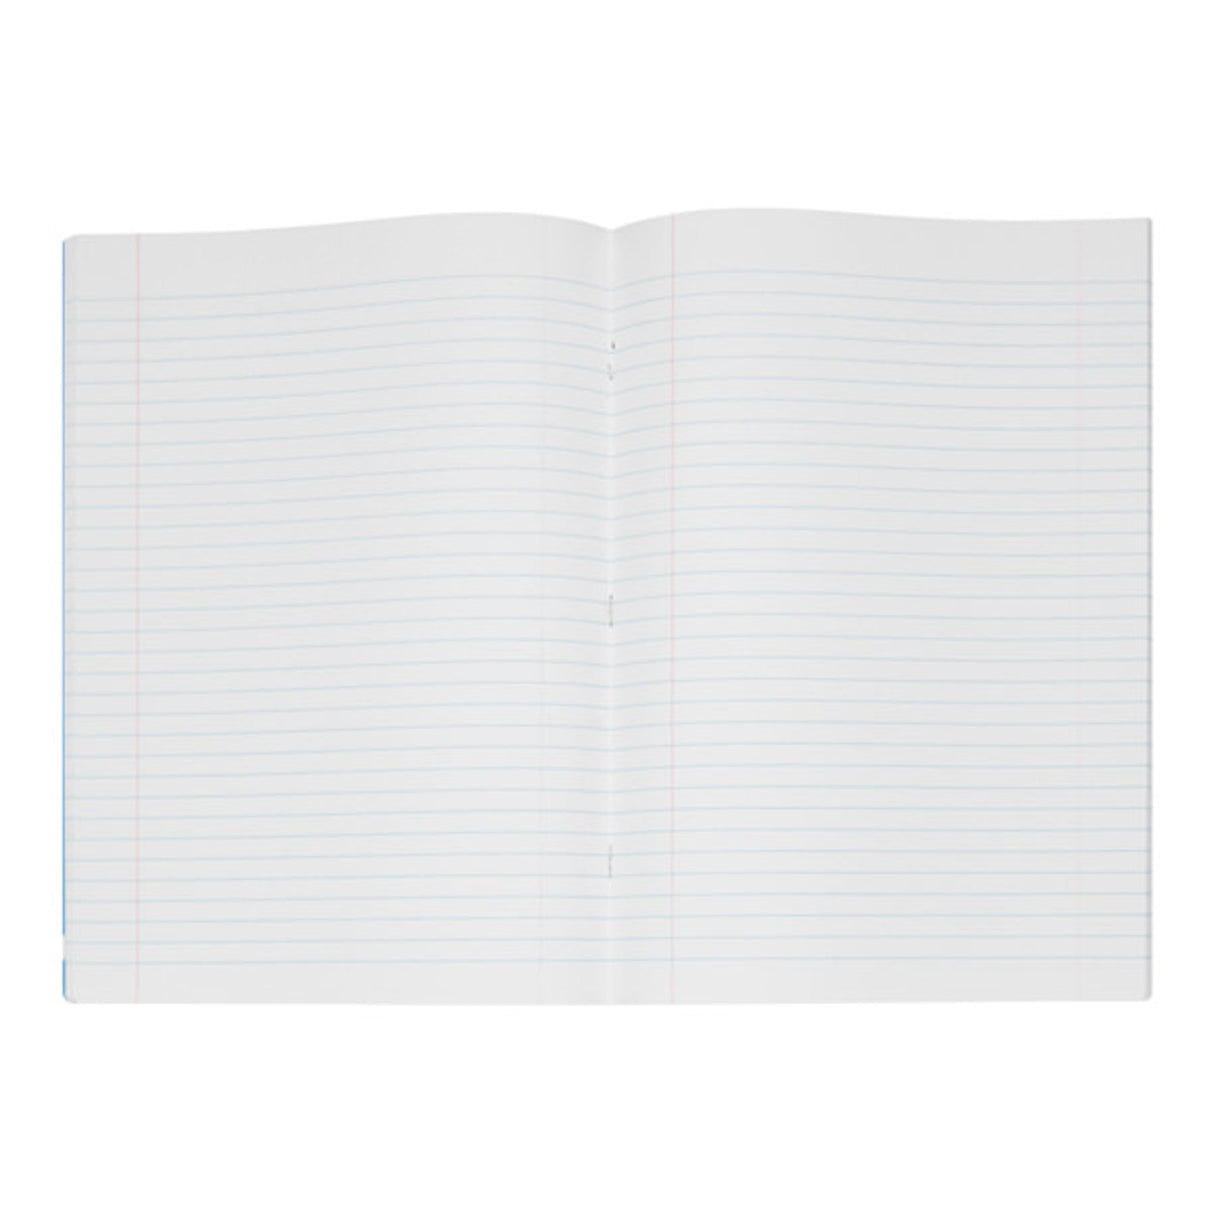 Premto A4 Durable Cover Manuscript Book - 120 Pages - Printer Blue | Stationery Shop UK